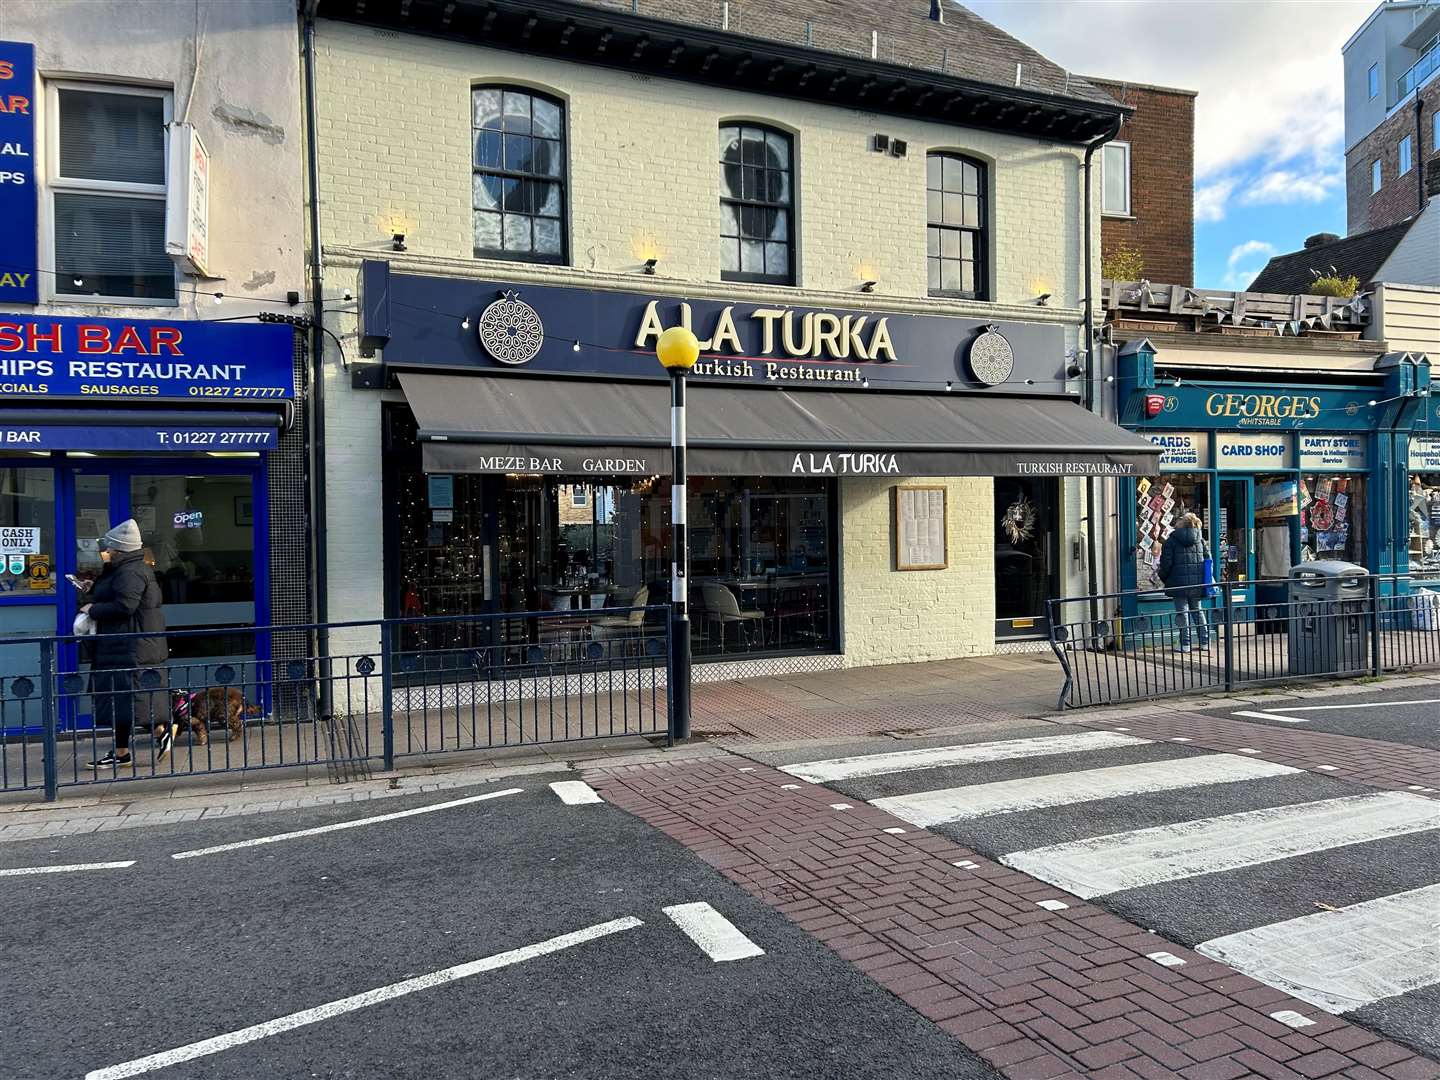 A La Turka opened in Whitstable High Street in December 2022